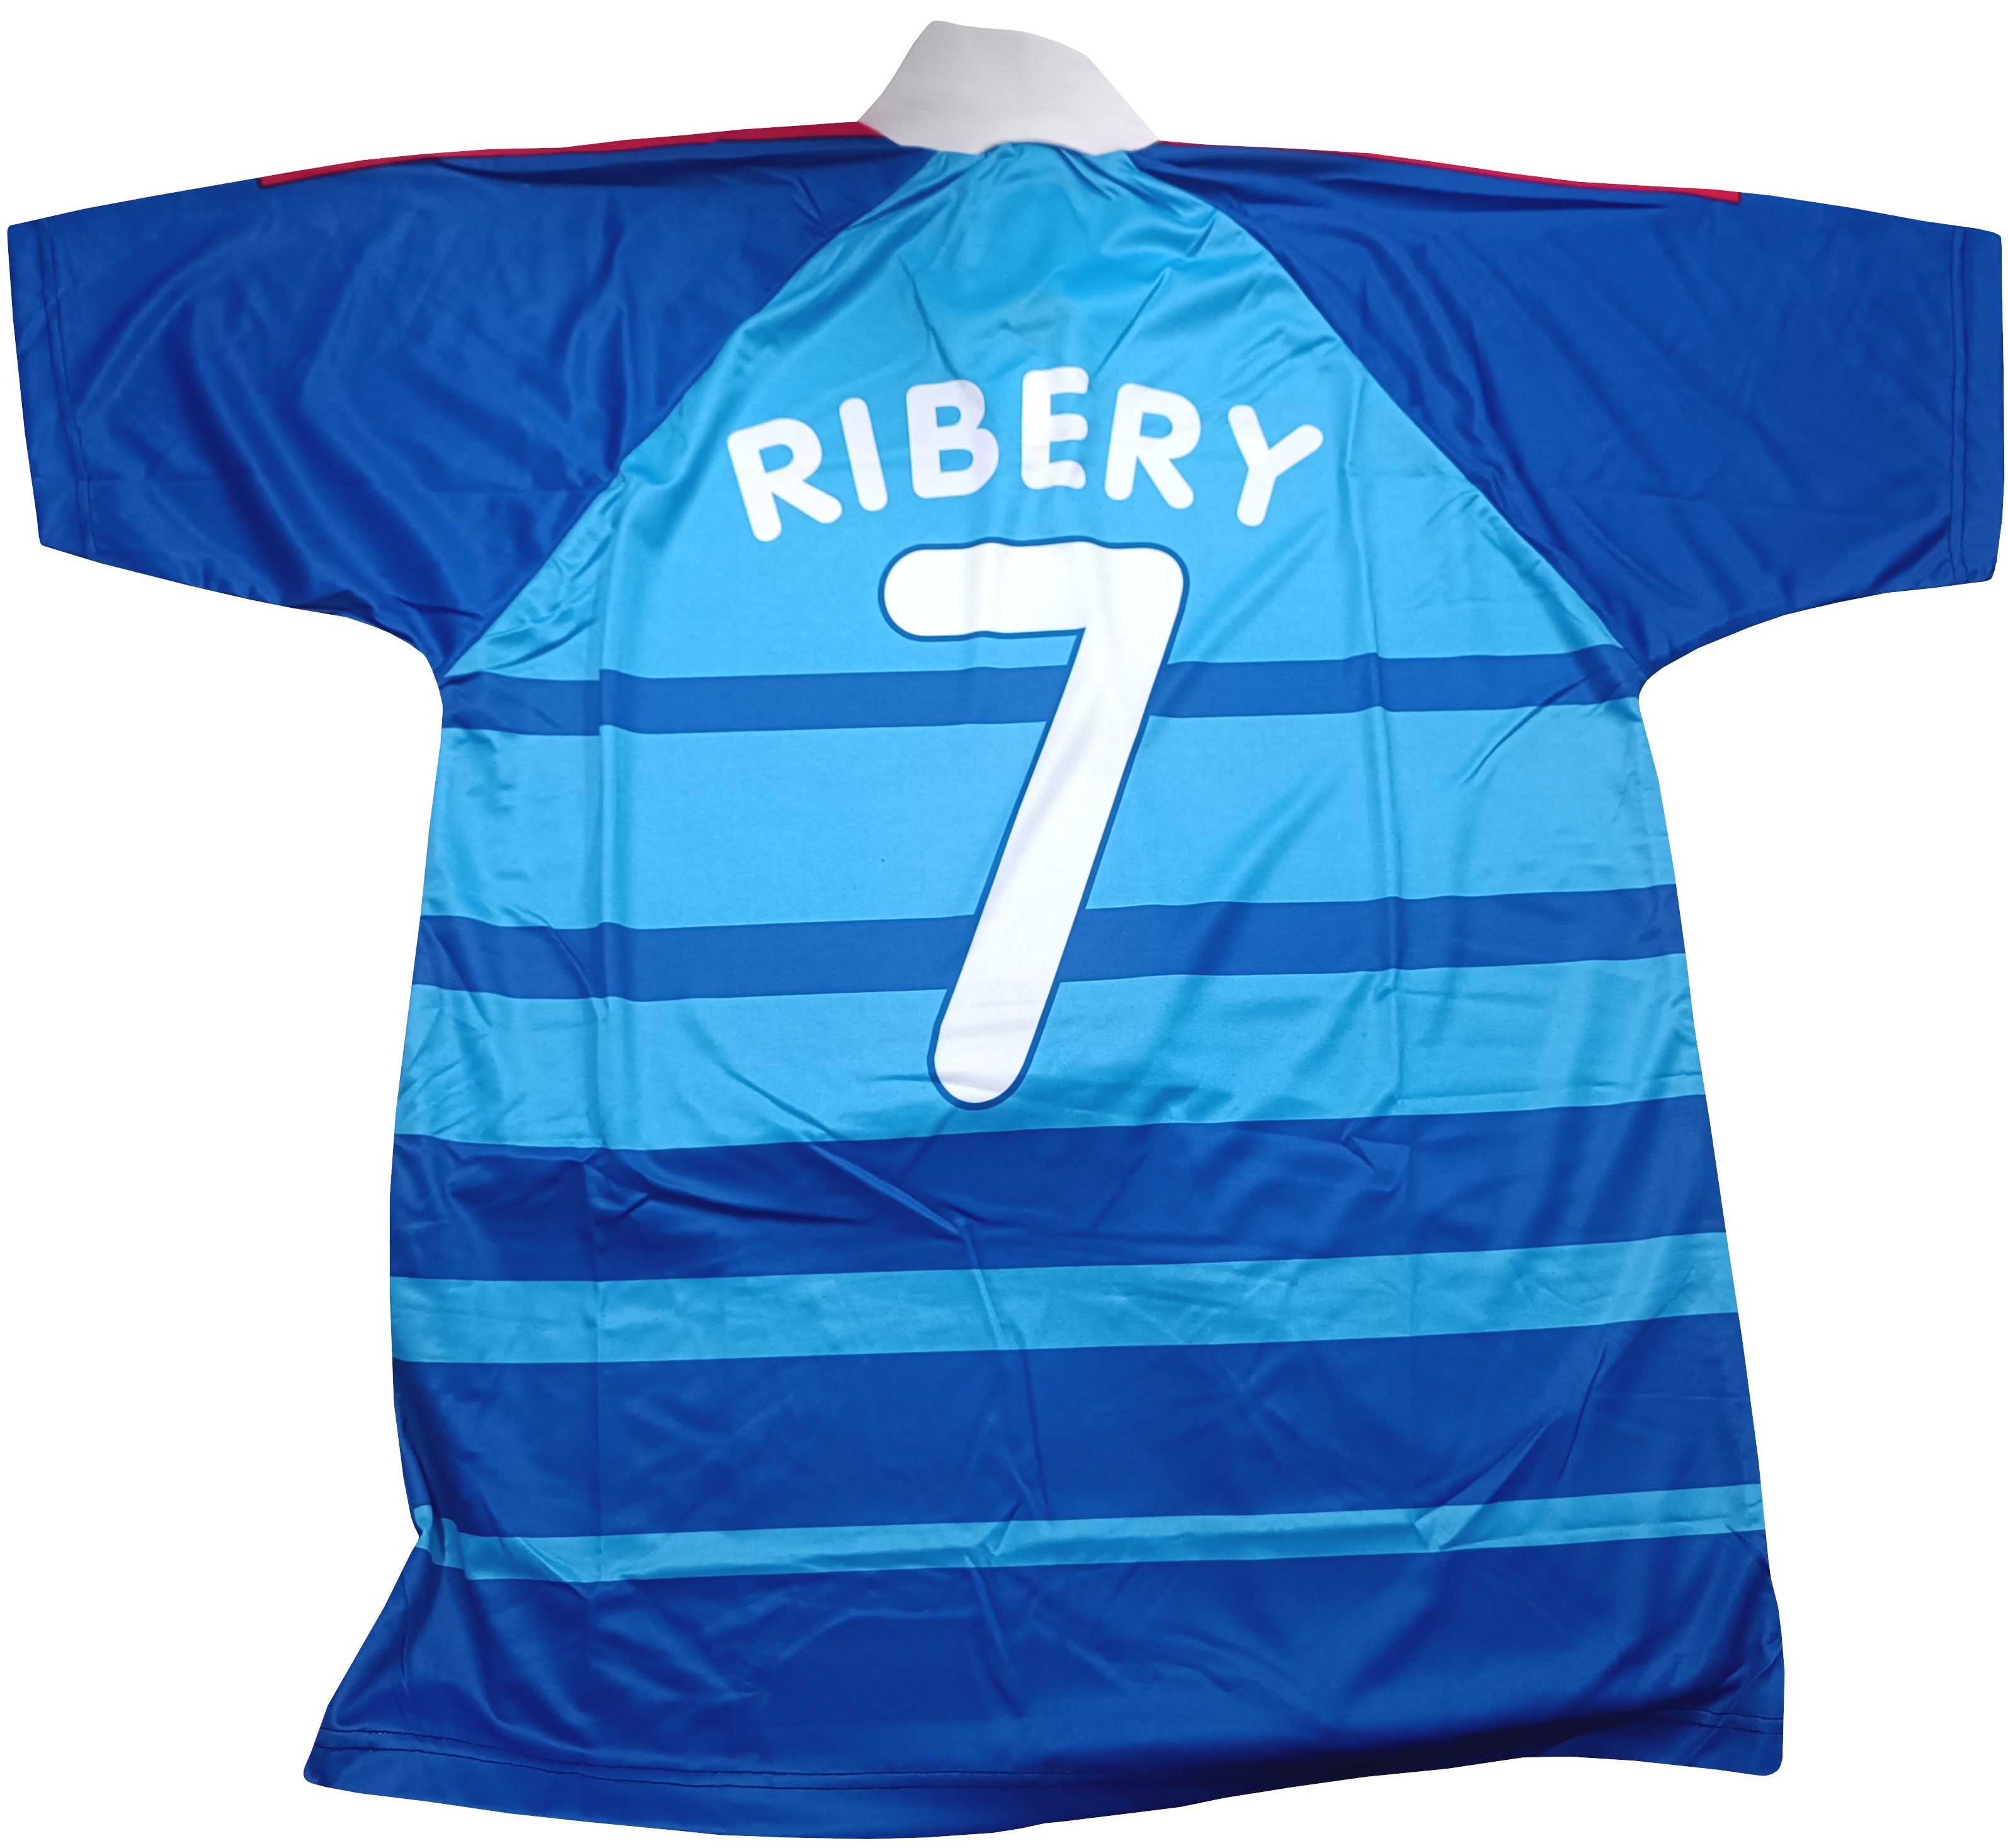 Fotbalový dres Ribery 7 Francie - výprodej Velikost: XL povánoční sleva